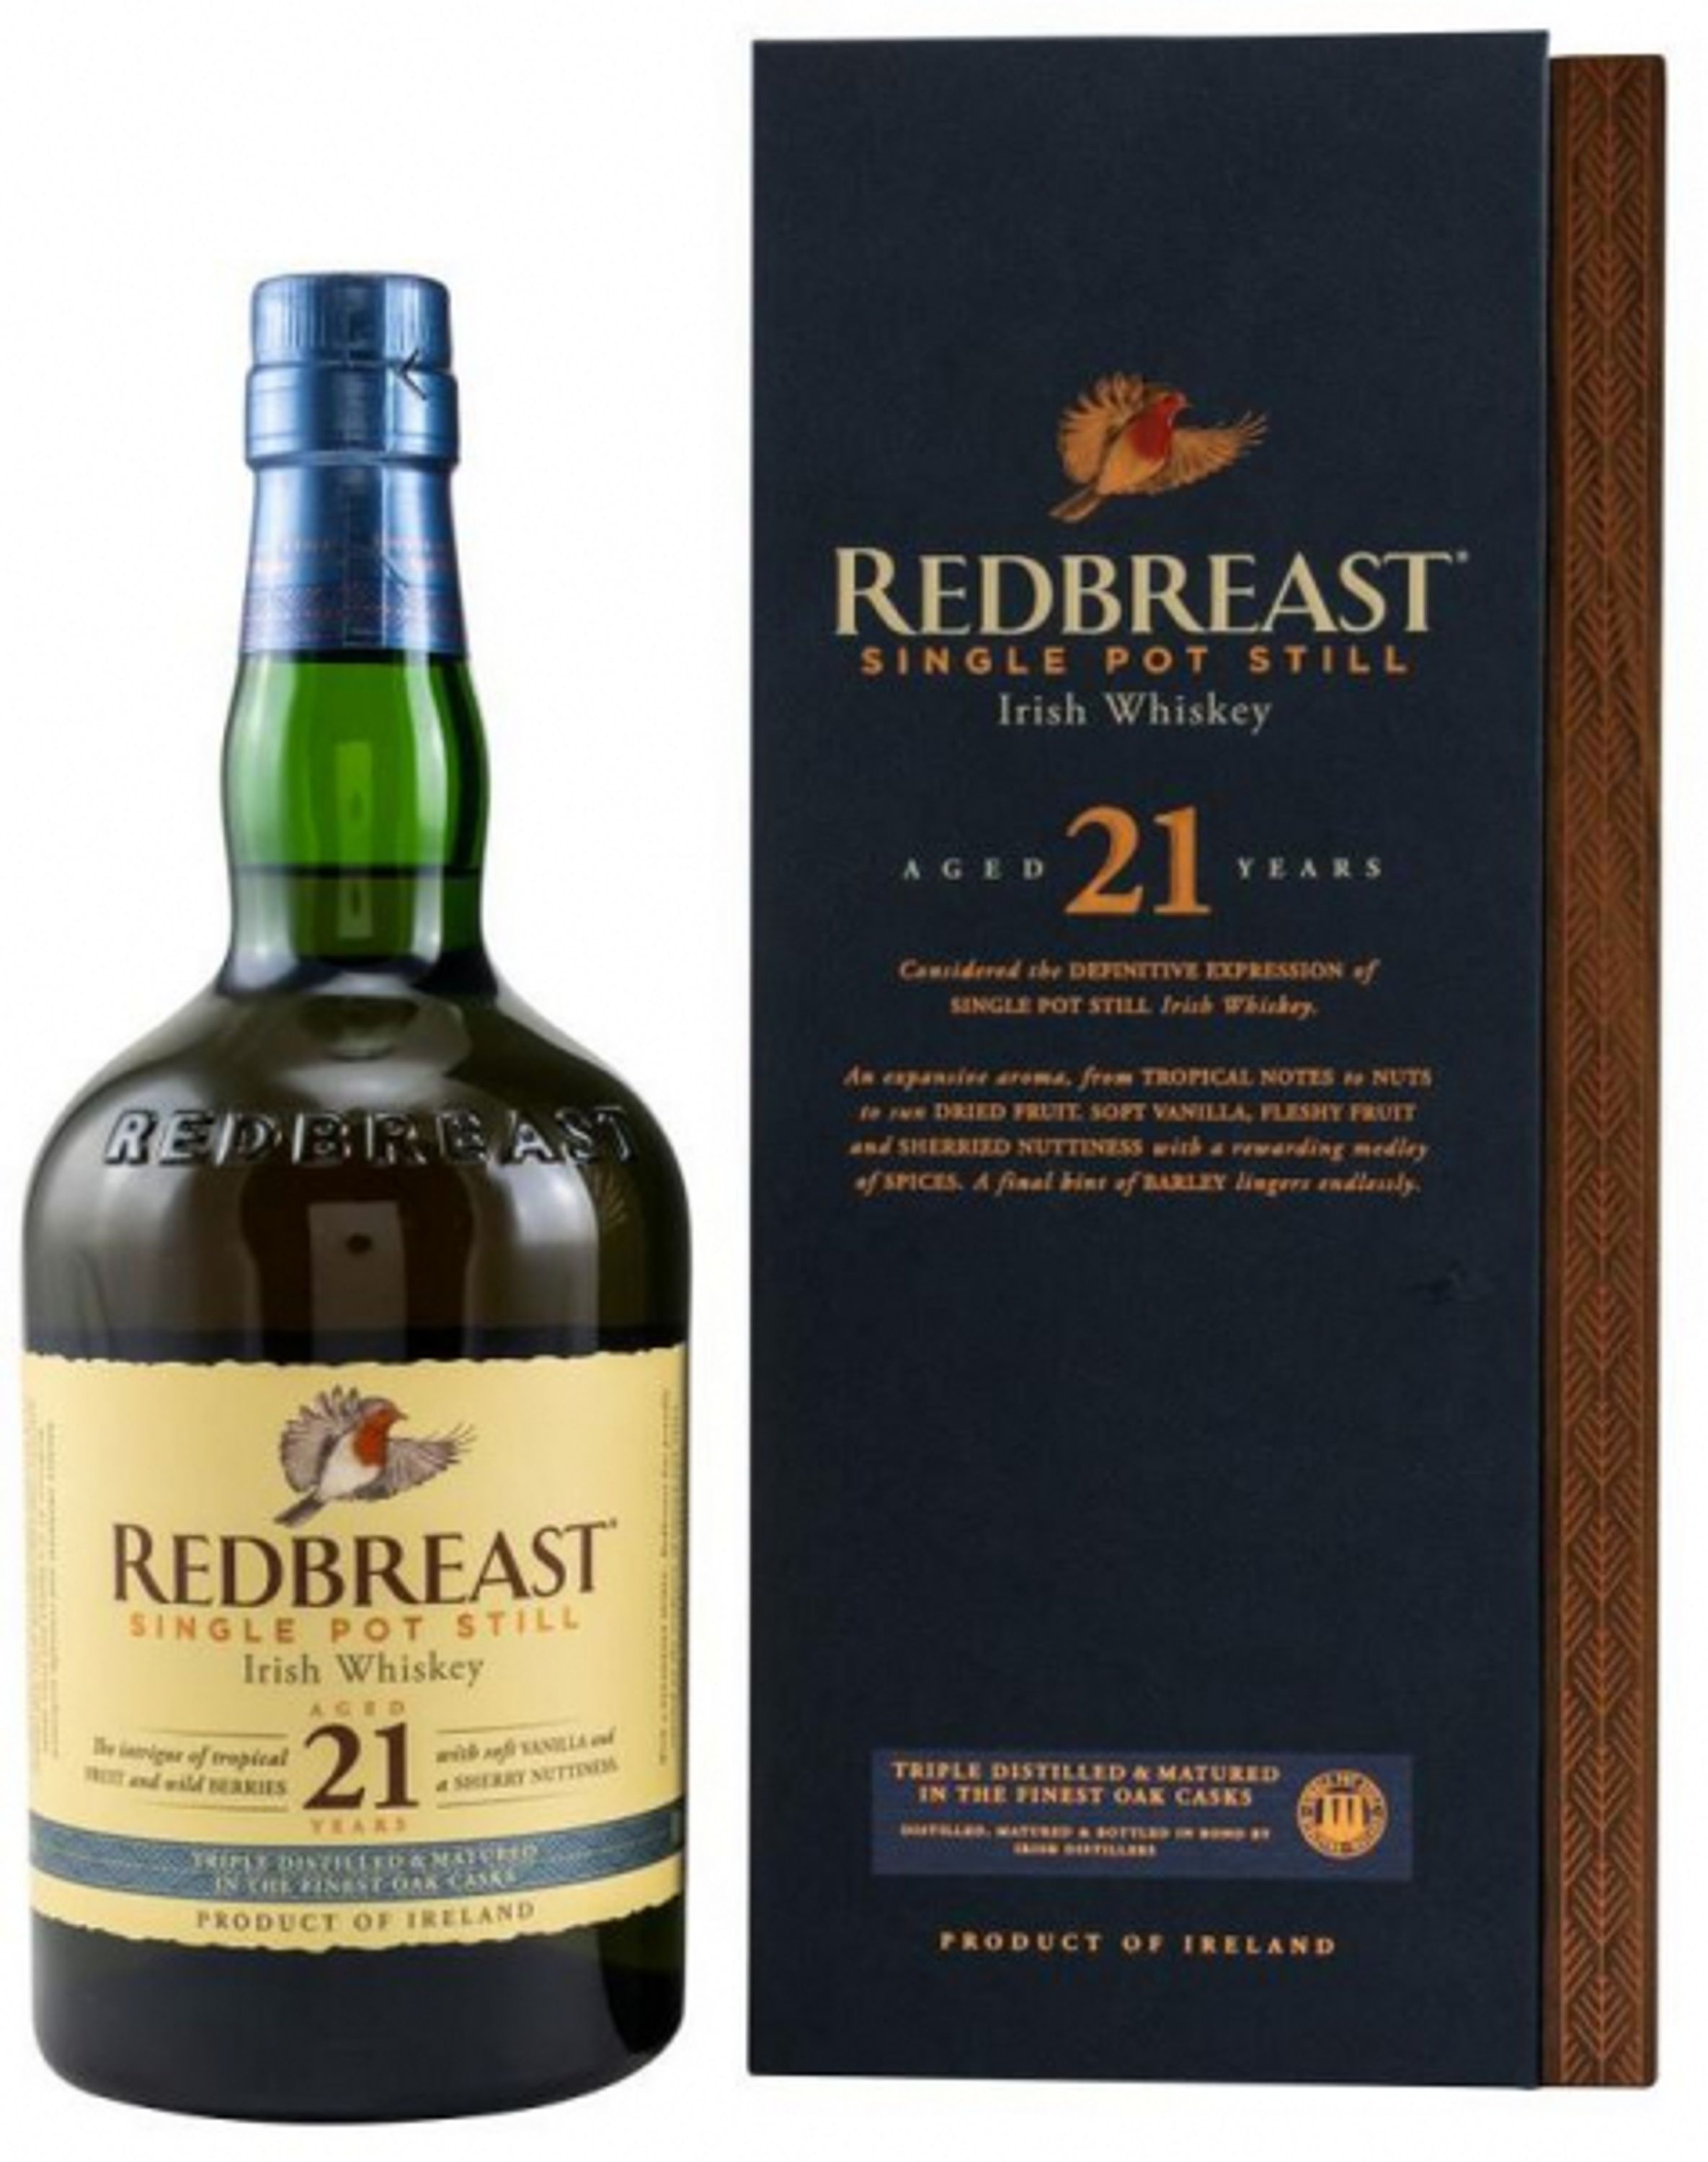 Redbreast 21 Years Single Pot Still Irish Whiskey 0.7l, alc. 46% by volume